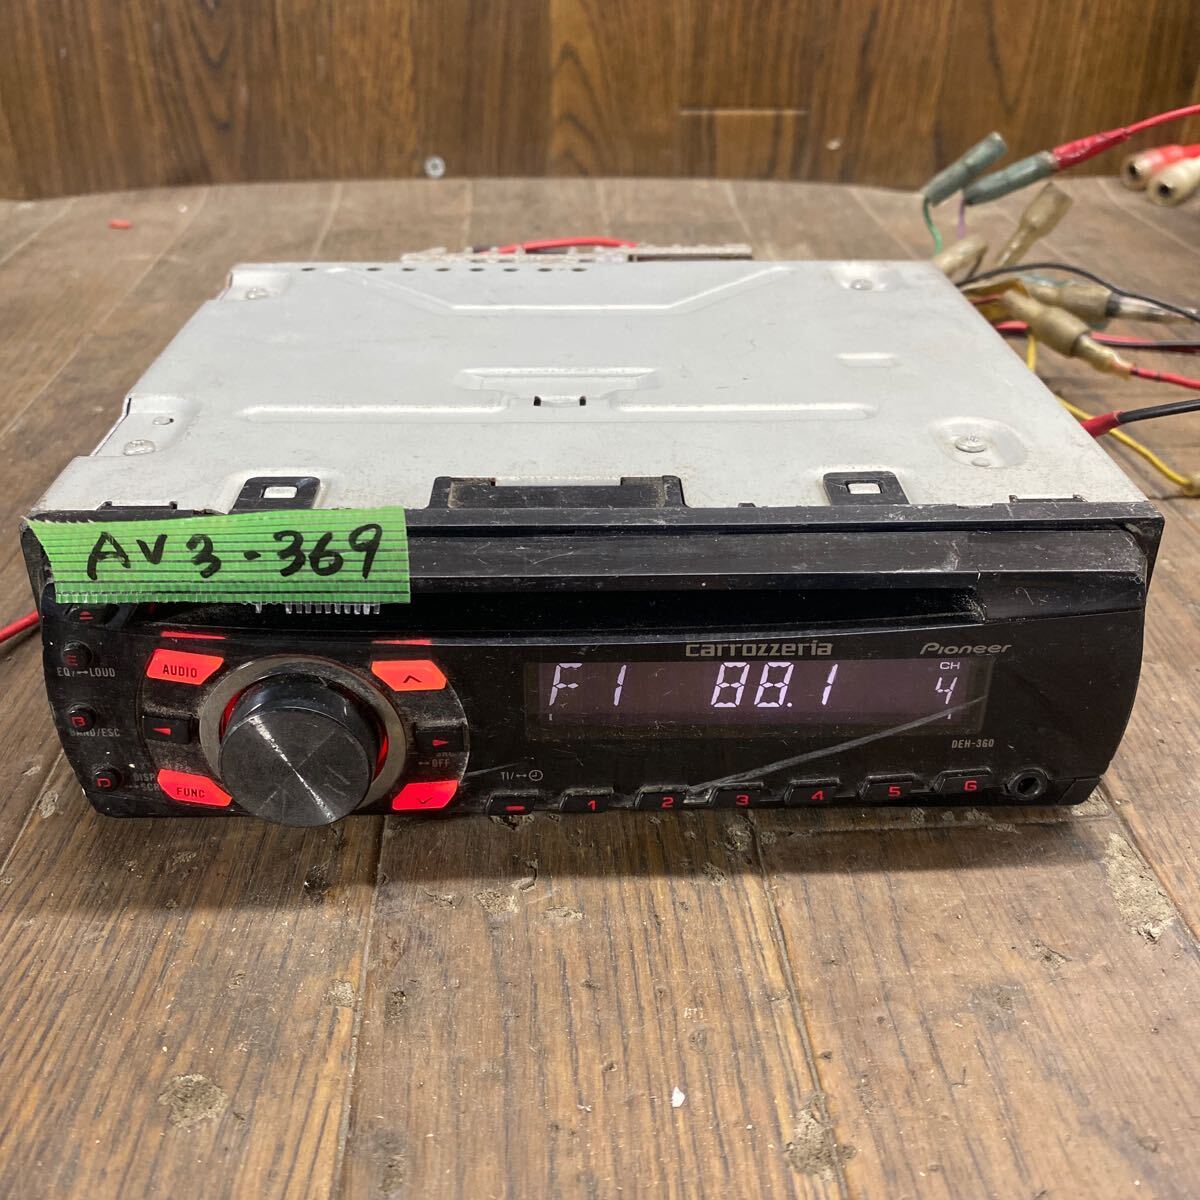 AV3-369 激安 カーステレオ CDプレーヤー Carrozzeria Pioneer DEH-360 CD FM/AM AUX 本体のみ 簡易動作確認済み 中古現状品_全体汚れあり